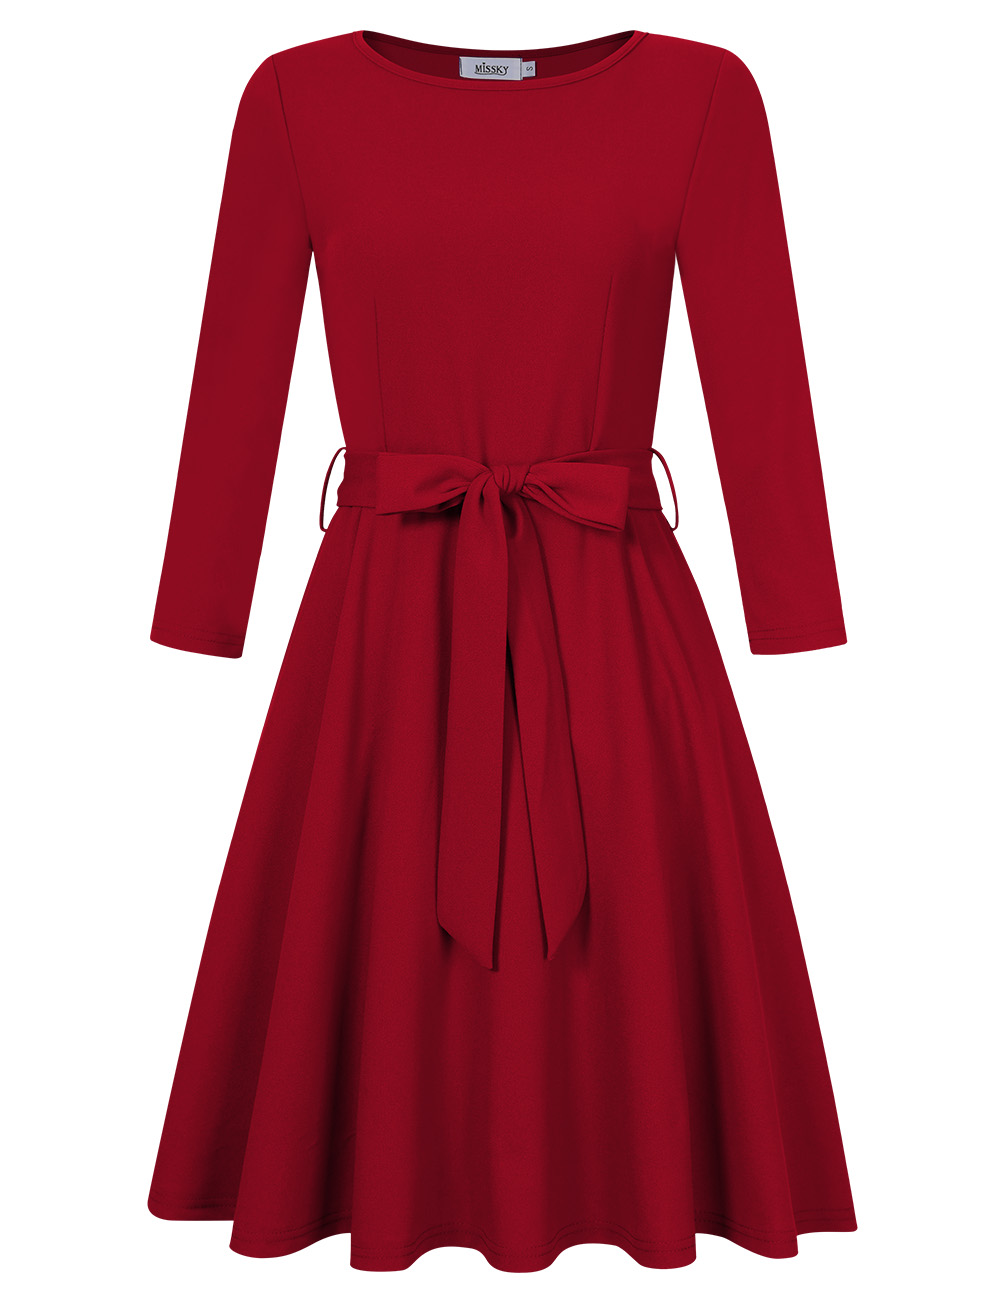 [US Direct] Ladies 3/4 Sleeve Casual Waist Repairing Swing Dress Red S+Missky Tag